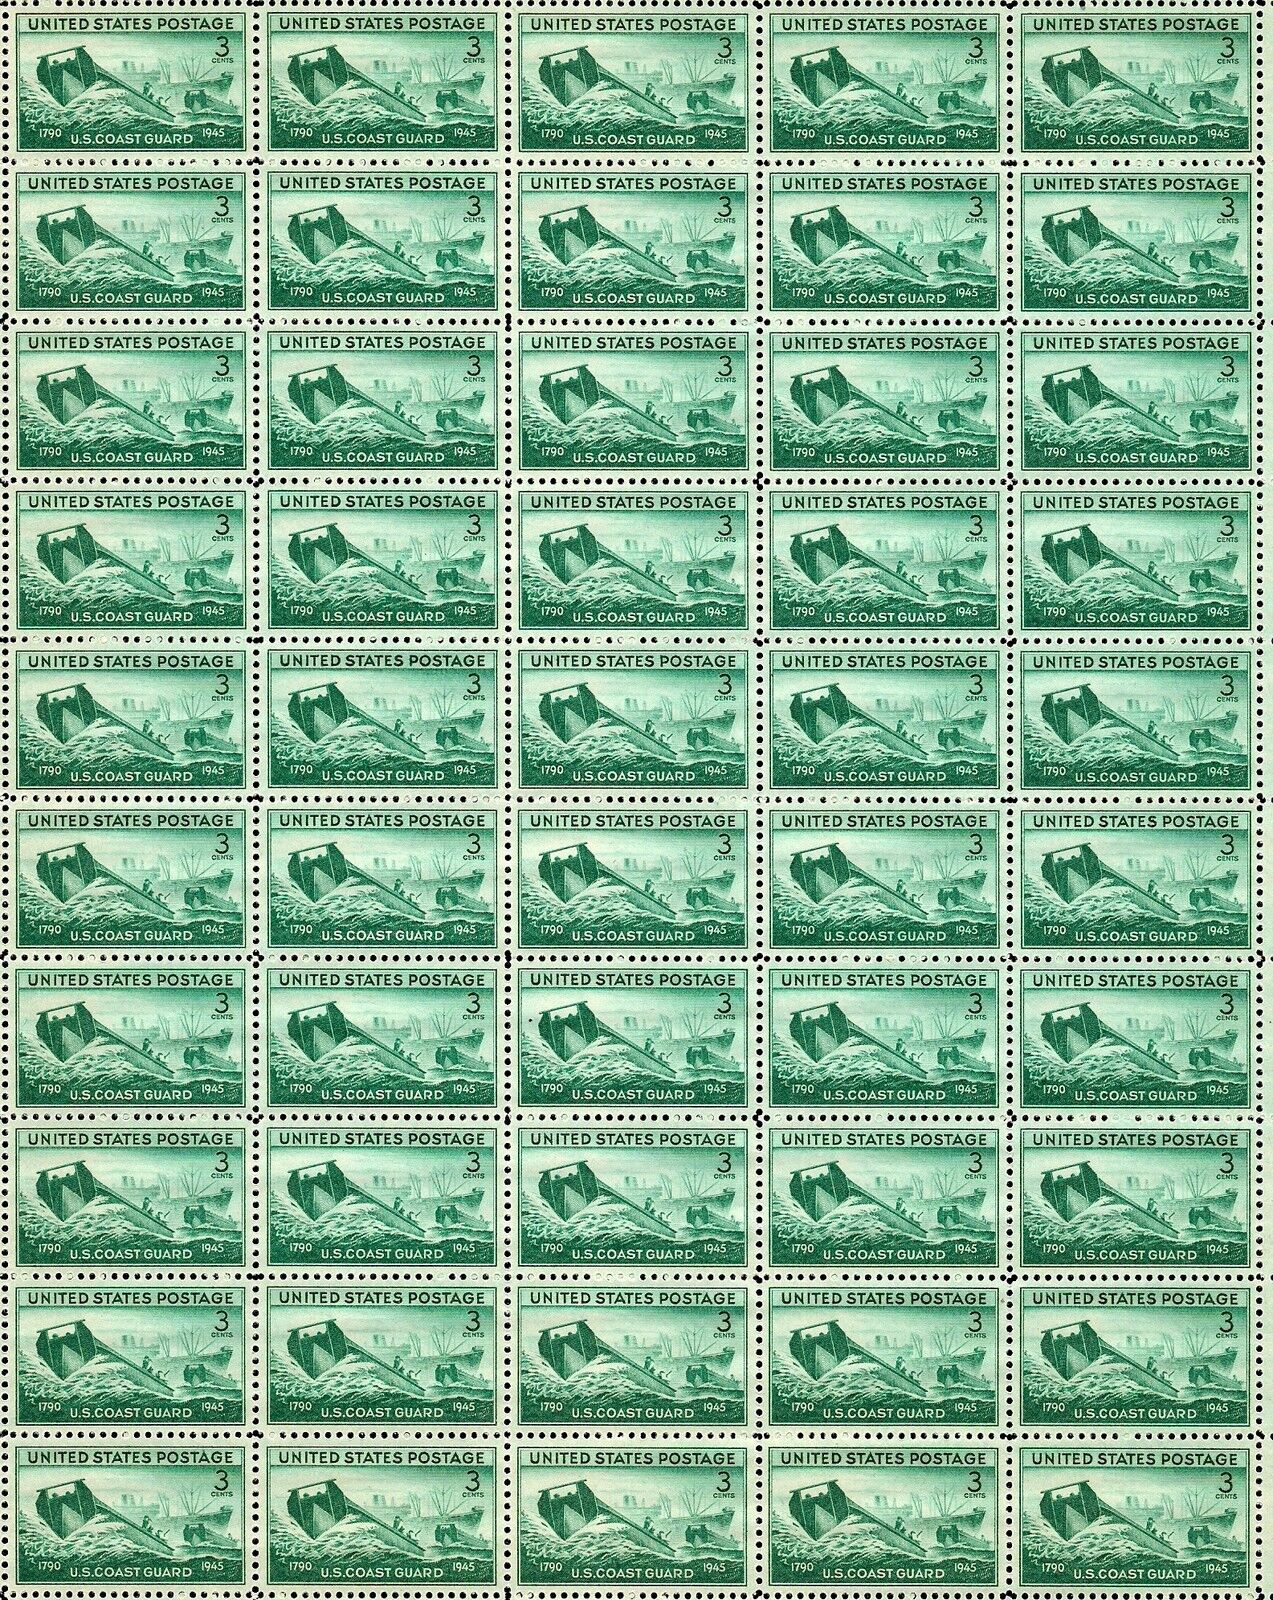 U.S. COAST GUARD (1945) – Full Mint -MNH- Sheet of 50 Vintage Postage Stamps